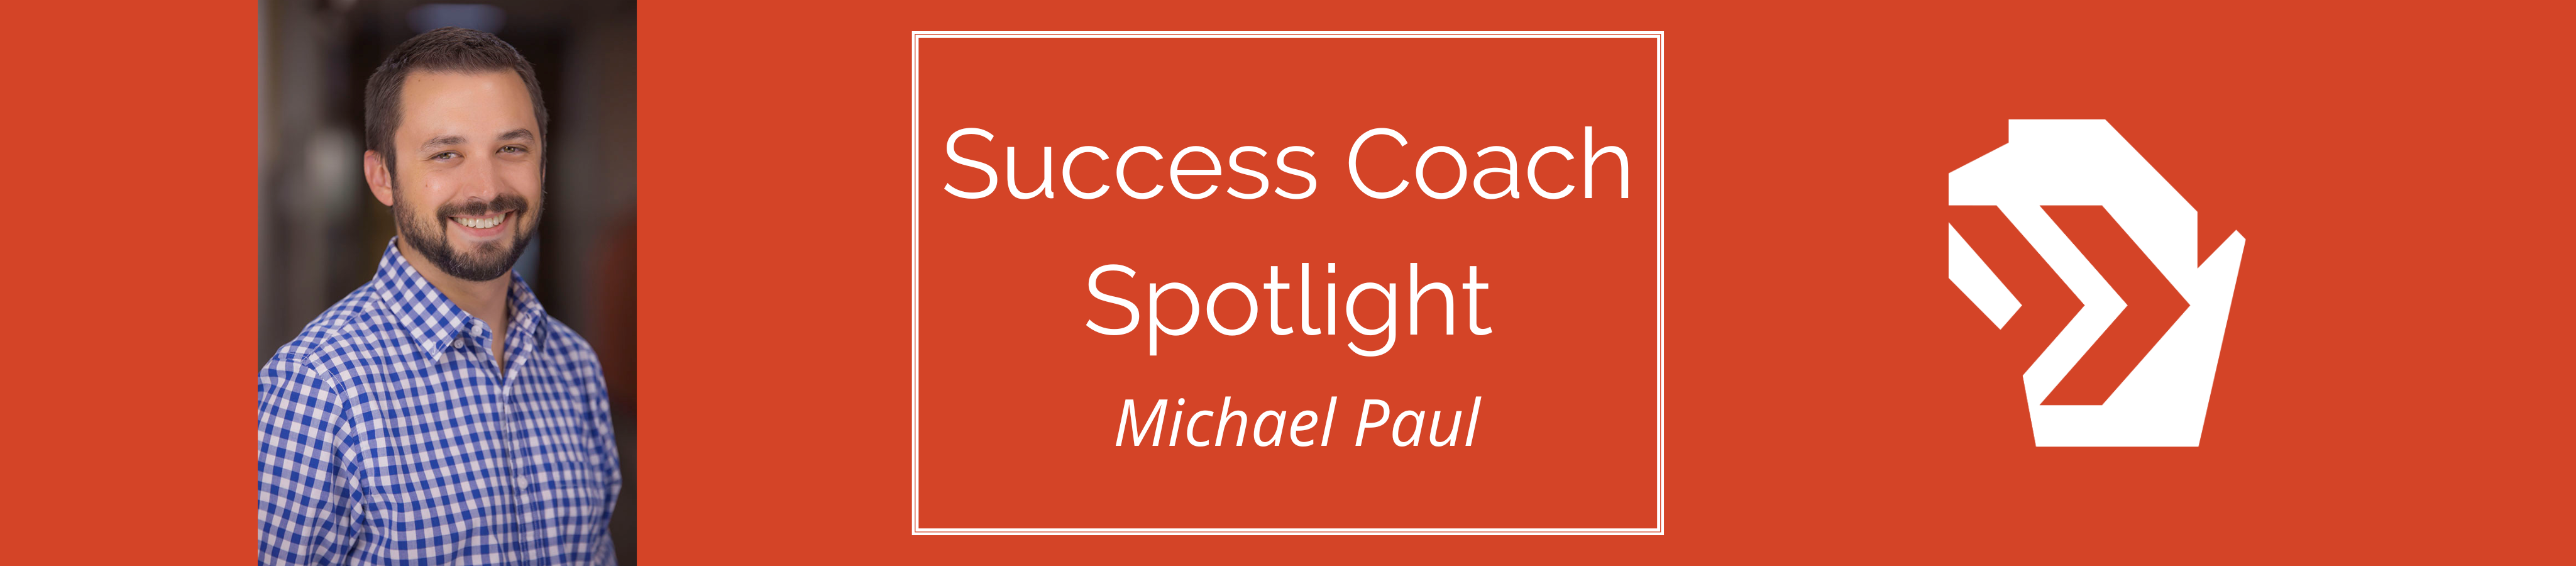 A graphic featuring a professional headshot of Senior Success Coach Michael Paul